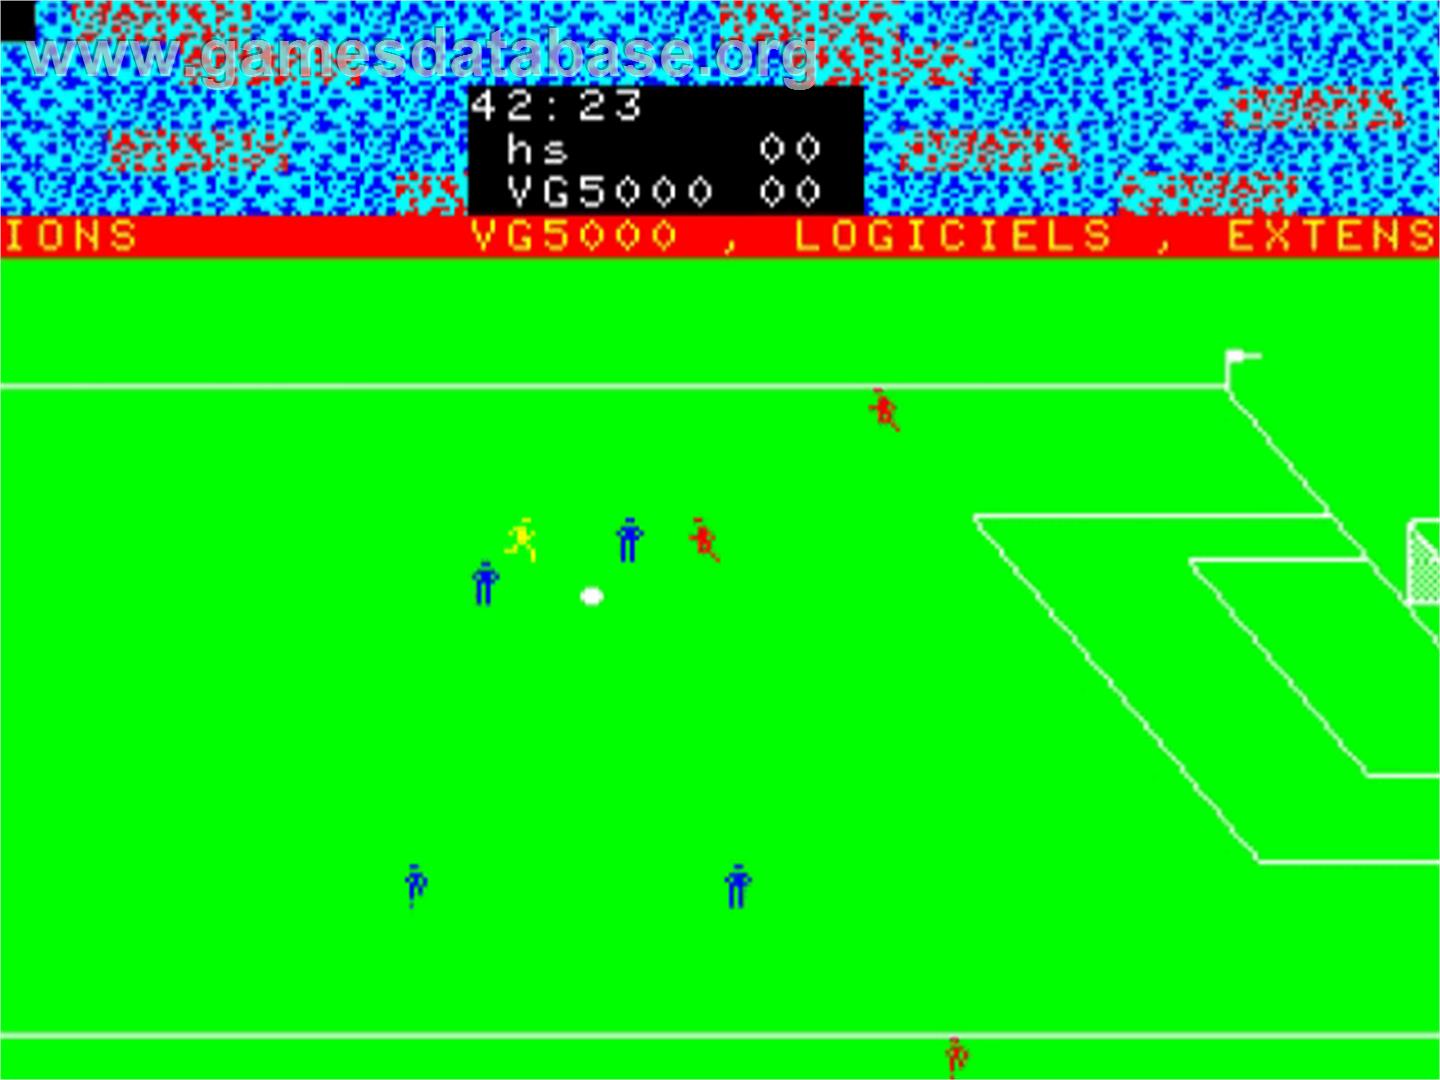 Football - Philips VG 5000 - Artwork - In Game